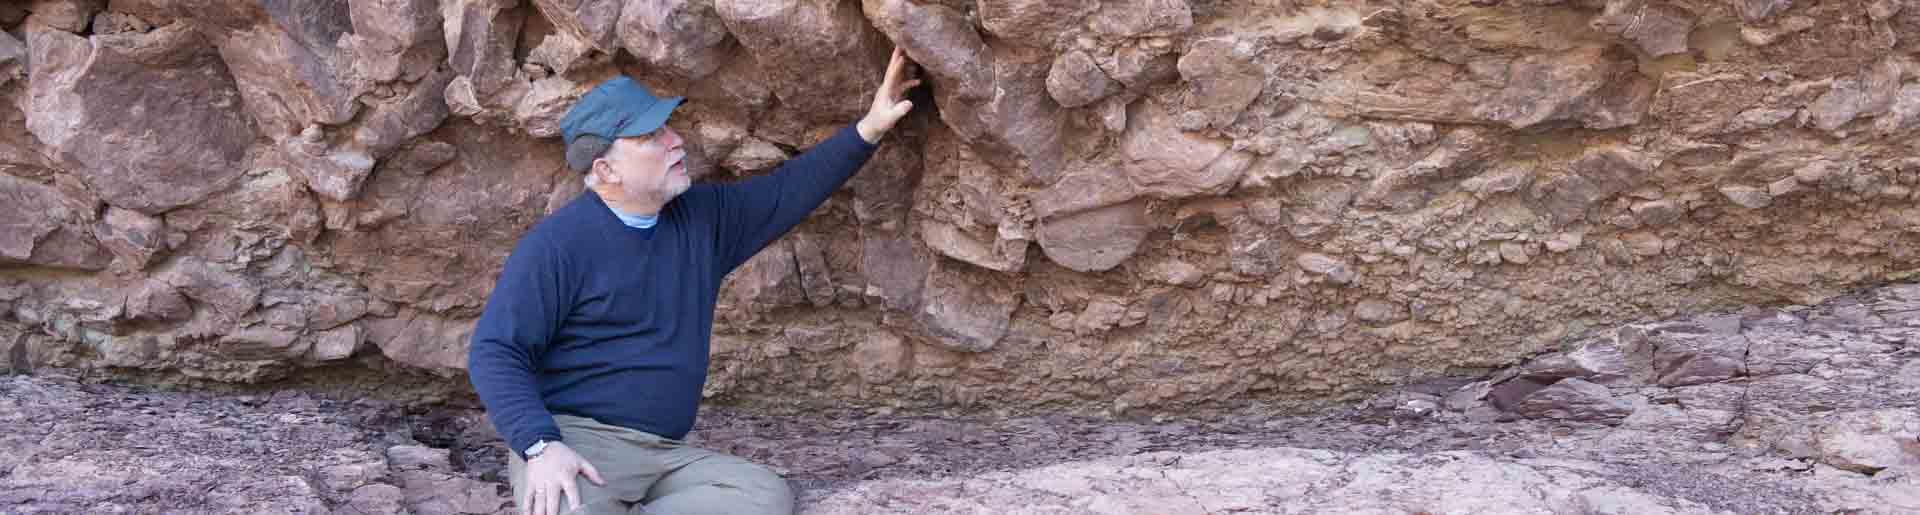 Dr. 惠特莫尔在大峡谷检查岩石.